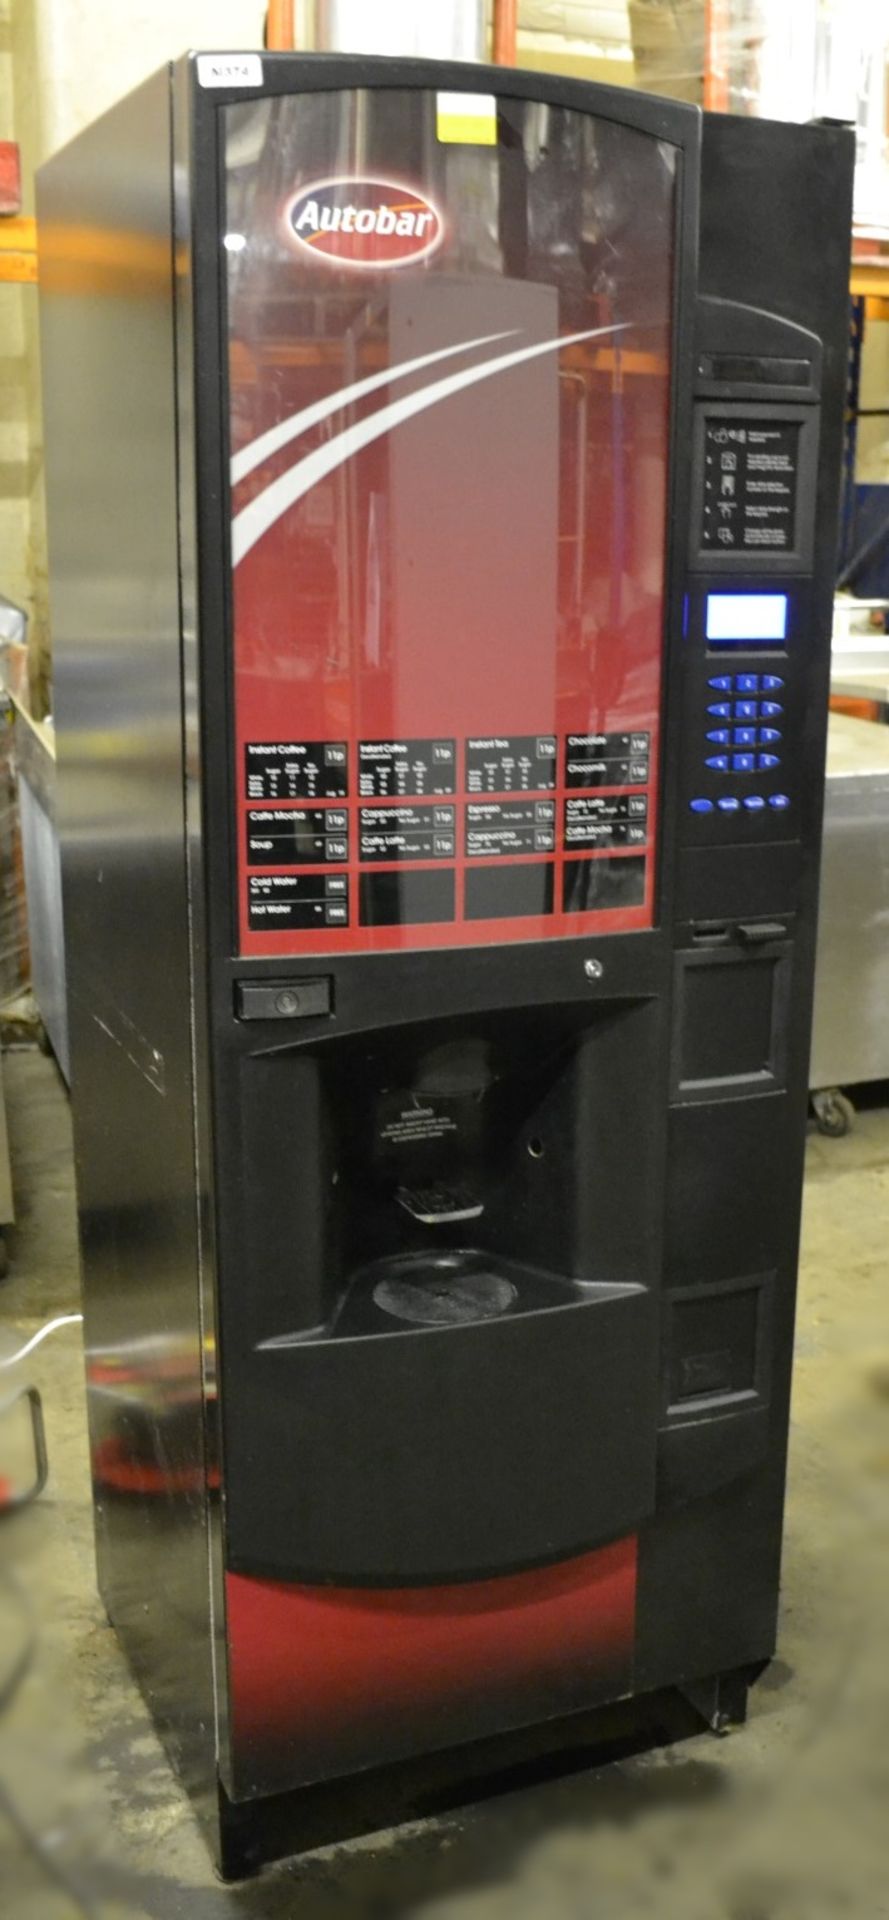 1 x Crane "Evolution" Hot Beverage Drinks Vending Machine - Year: 2011 *Read Description* - Image 8 of 12